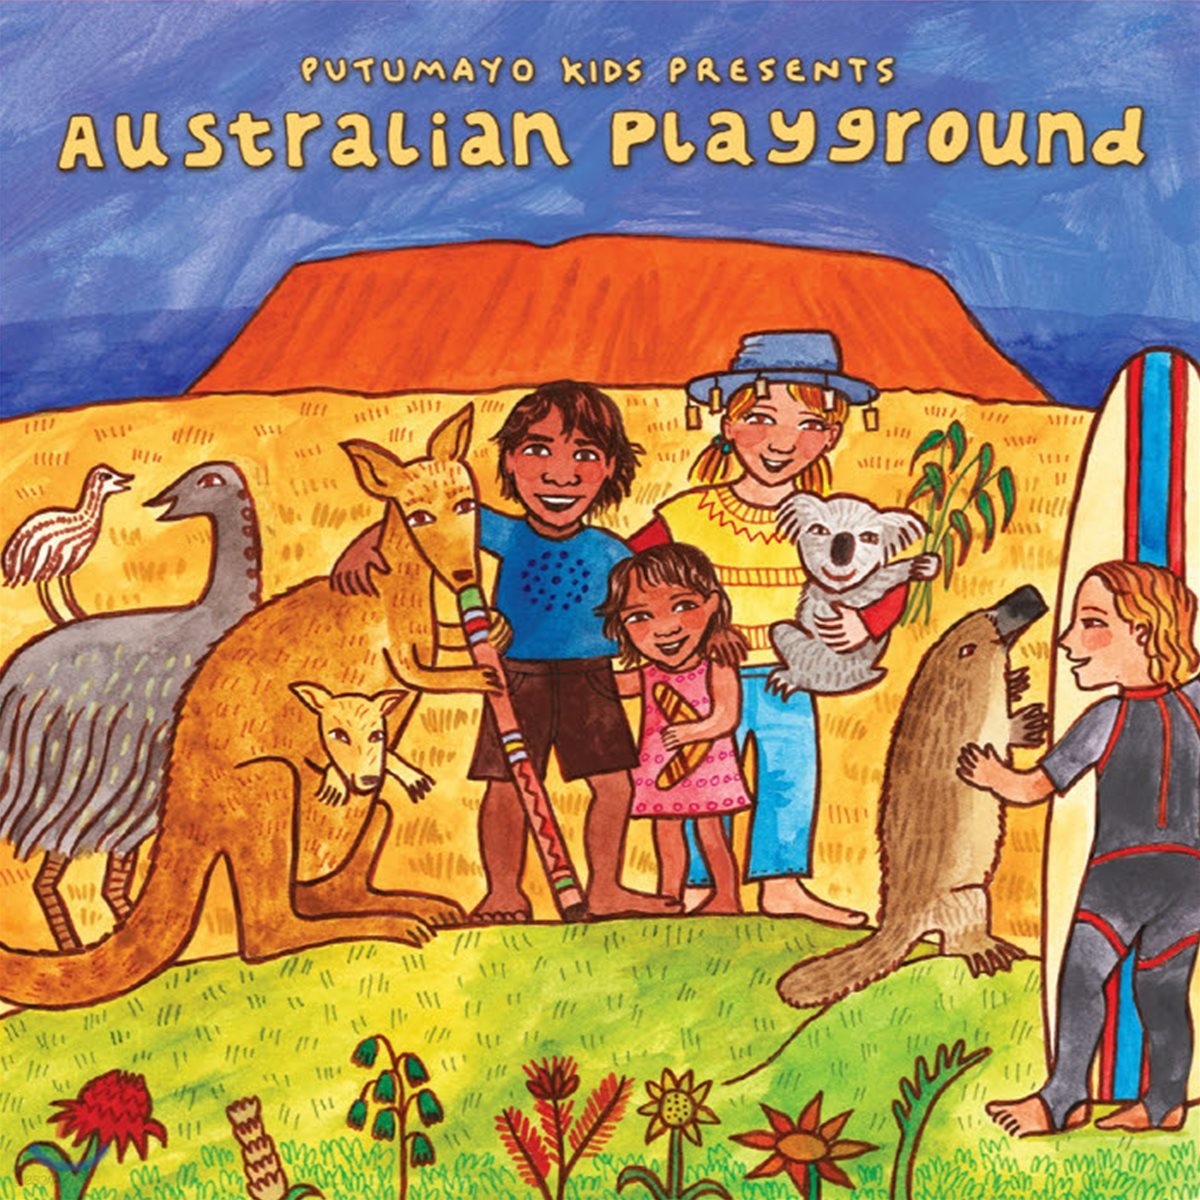 Putumayo Kids presents Australian Playground (푸투마요 키즈 프레젠트 오스트레일리안 플레이그라운드)